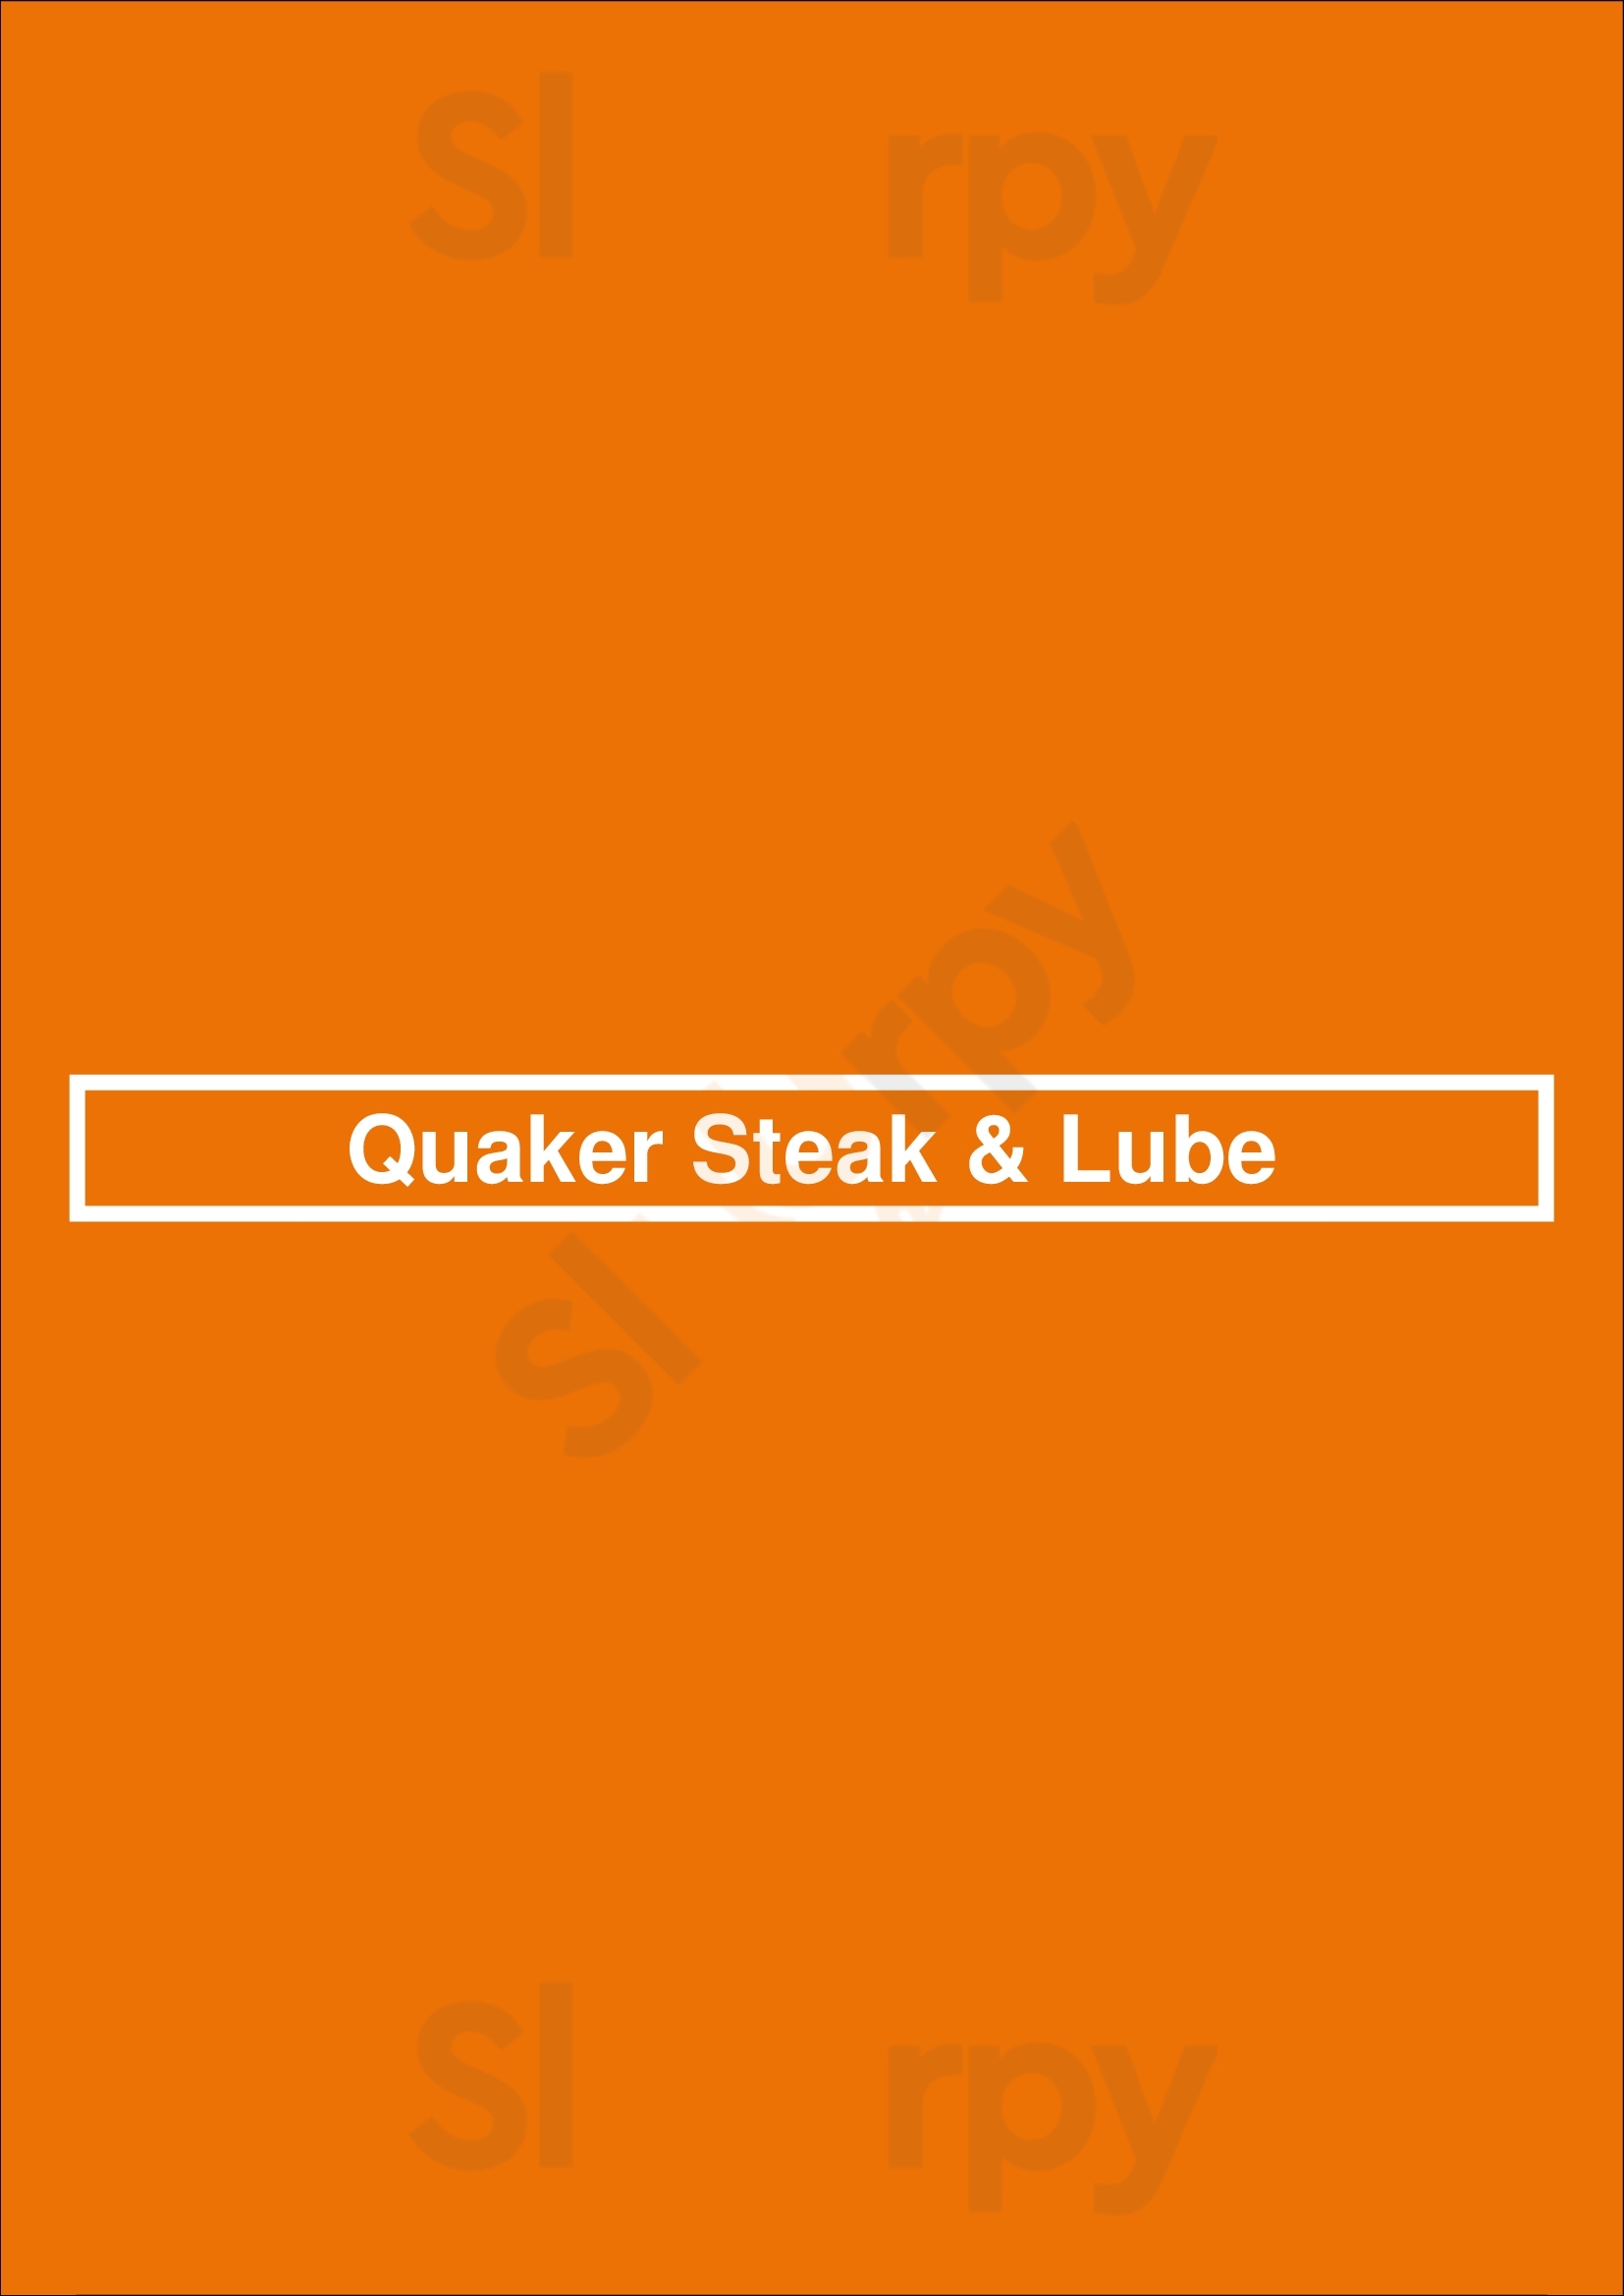 Quaker Steak & Lube Portage Menu - 1